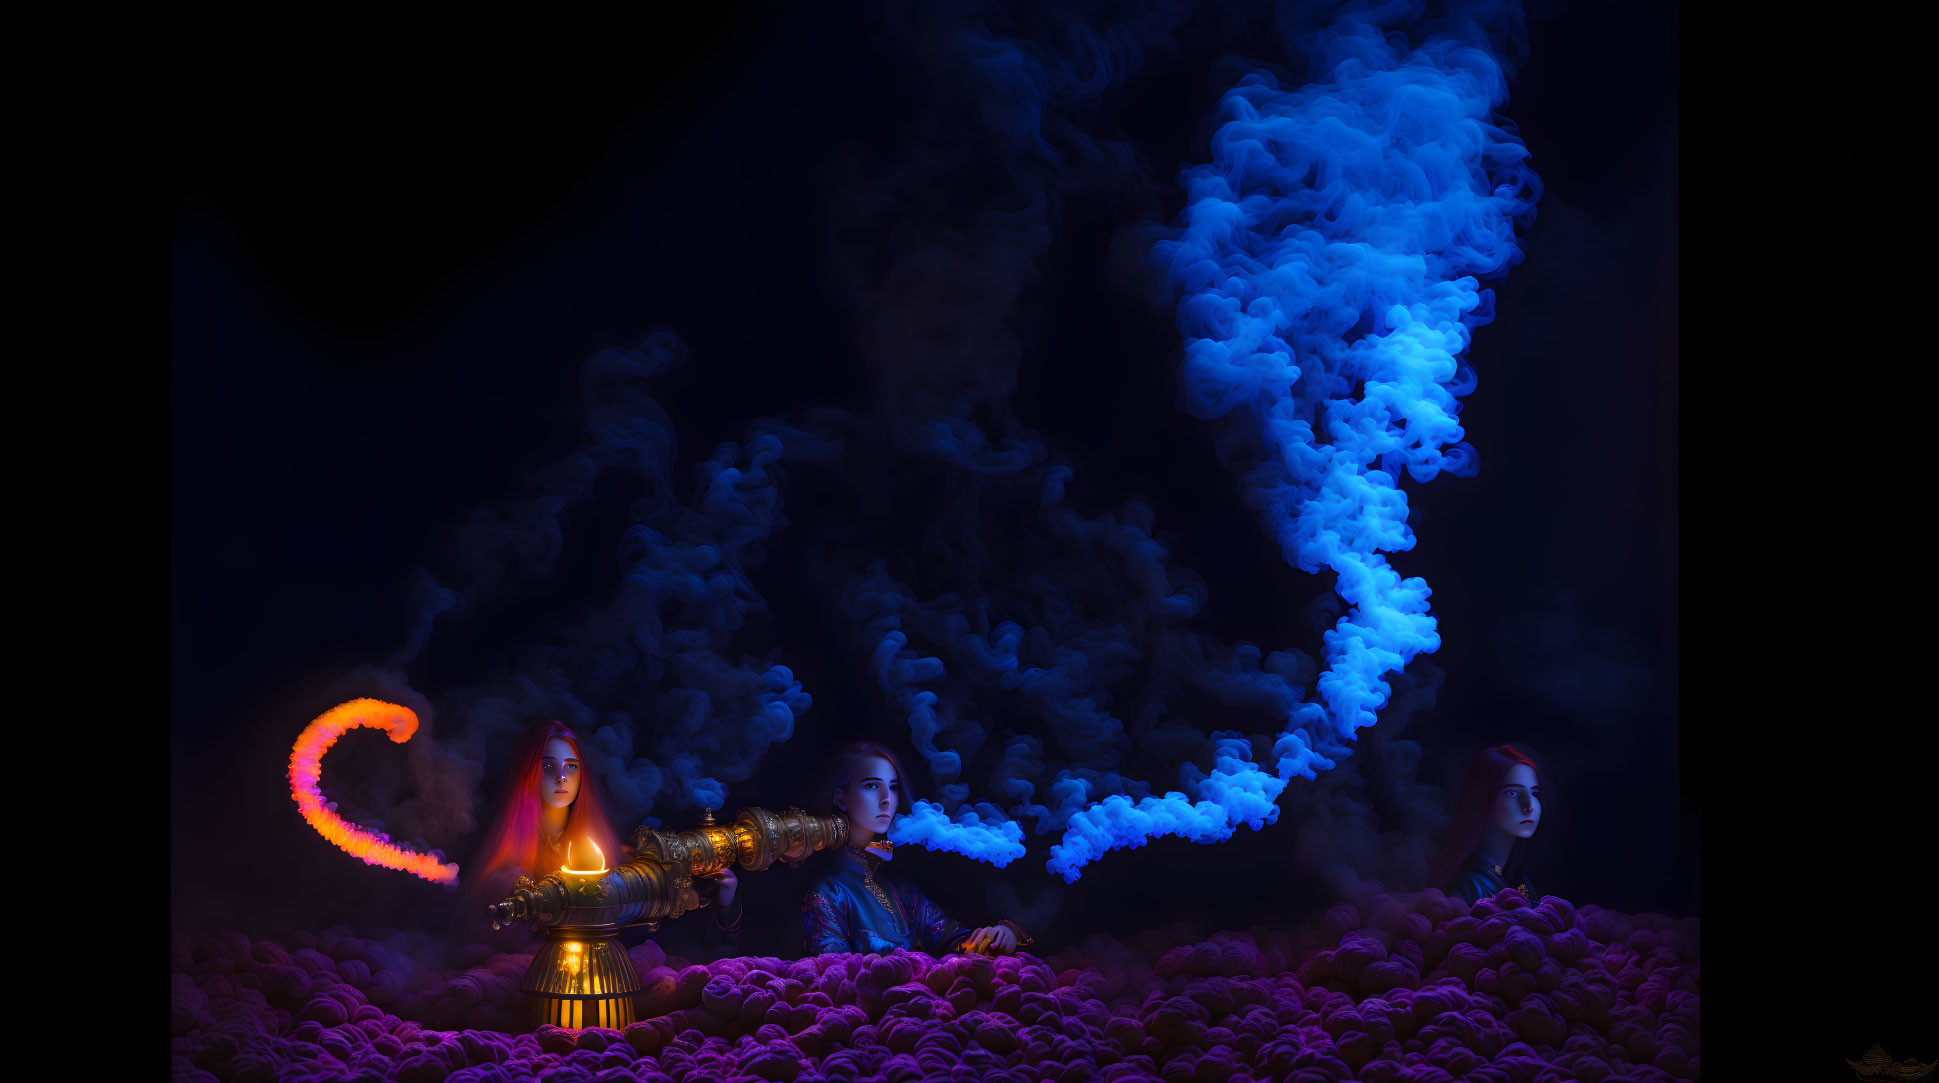 Dark figures with swirling blue and orange smoke over purple spheres